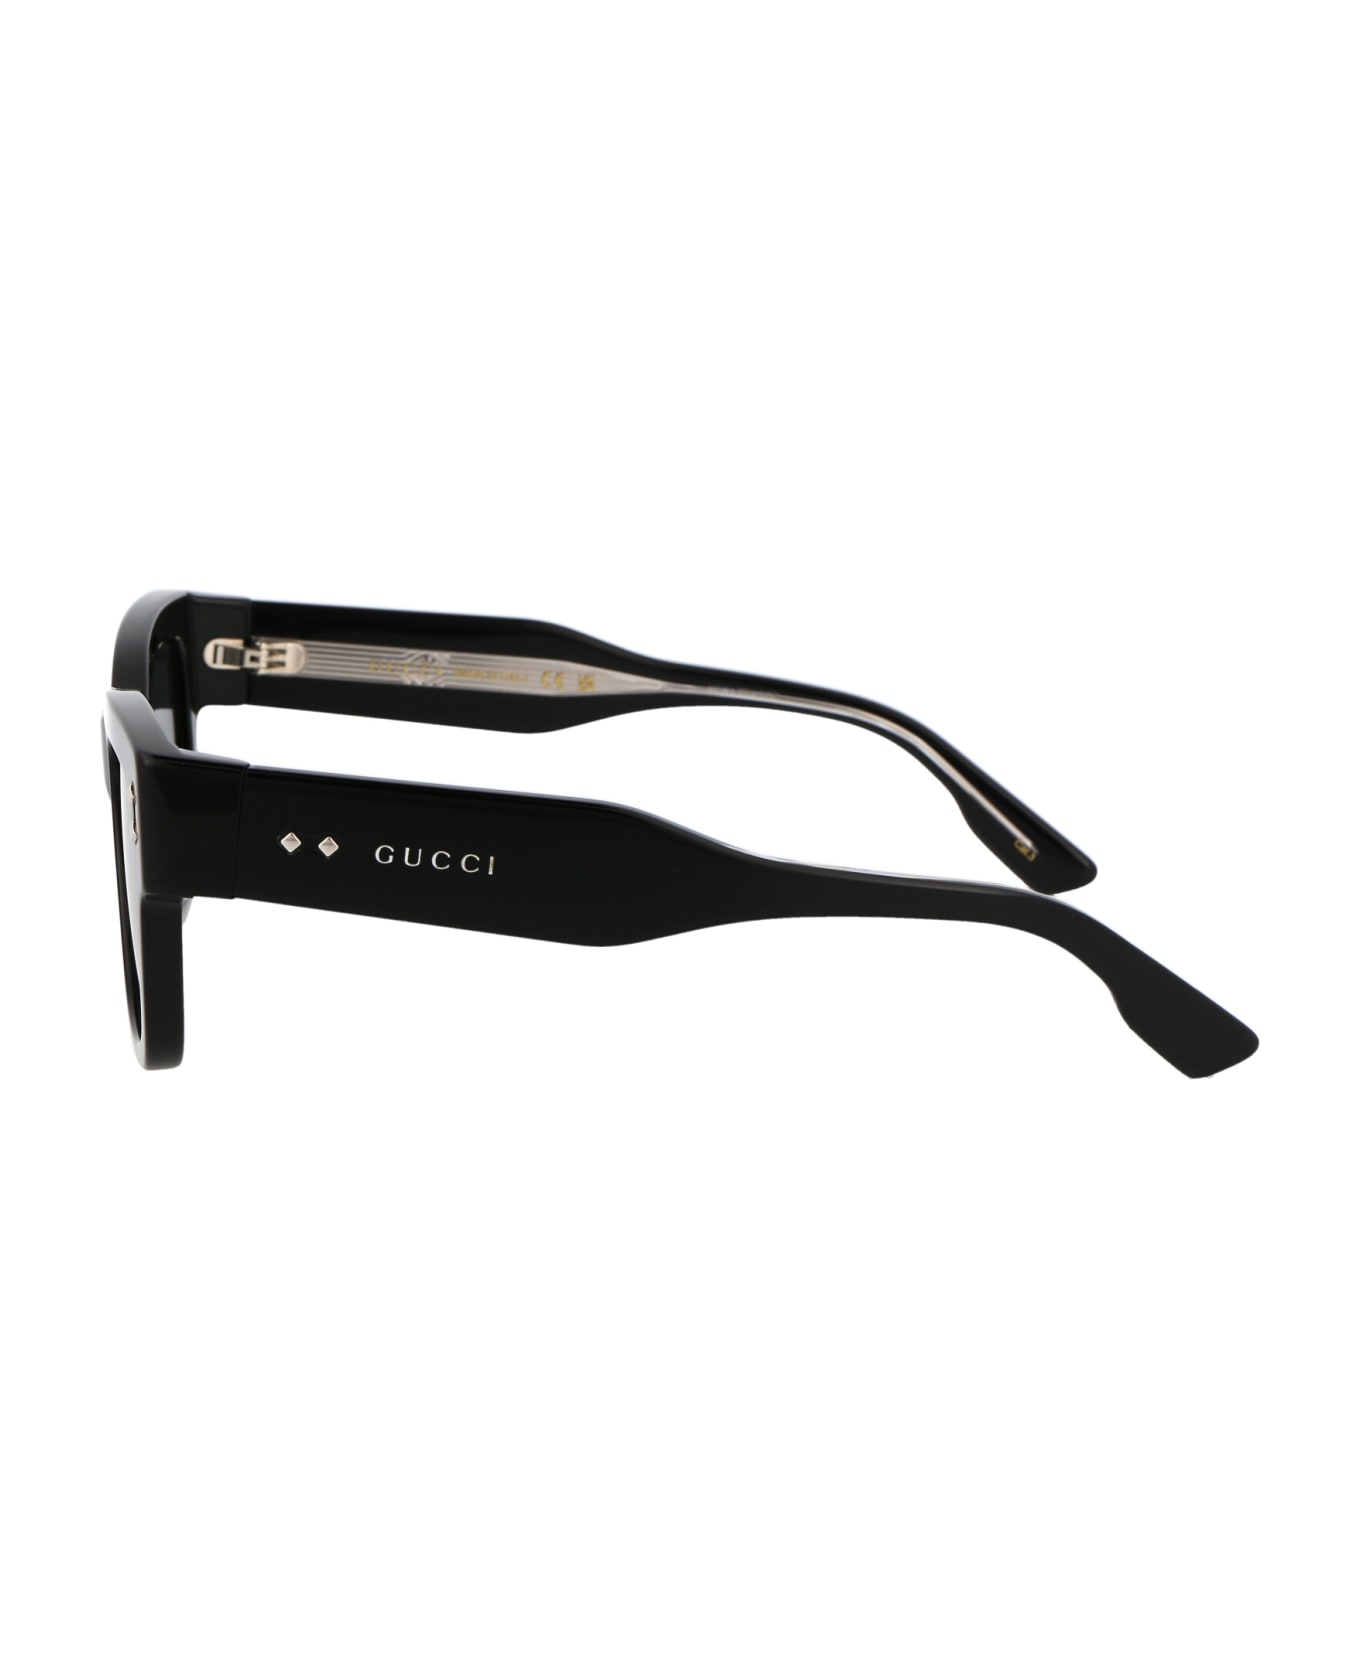 Gucci Eyewear Gg1217s Sunglasses - 001 BLACK BLACK GREY